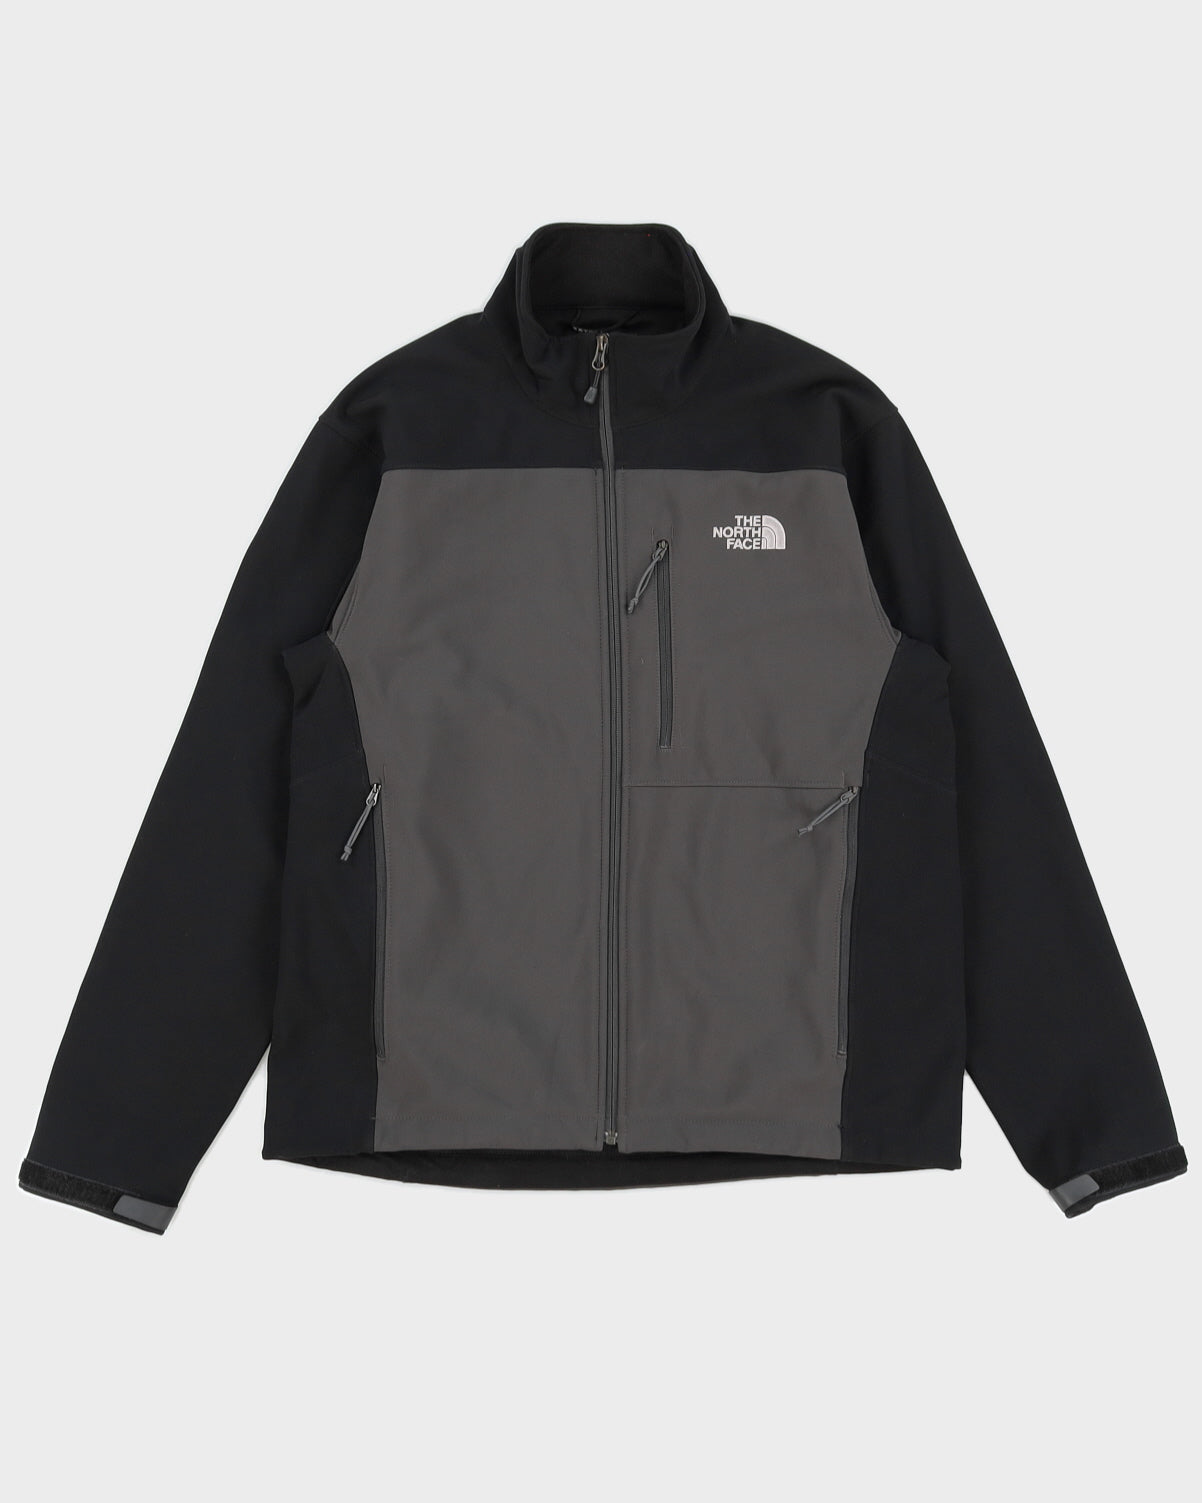 The North Face Men's Grey & Black Zip Up Jacket - L